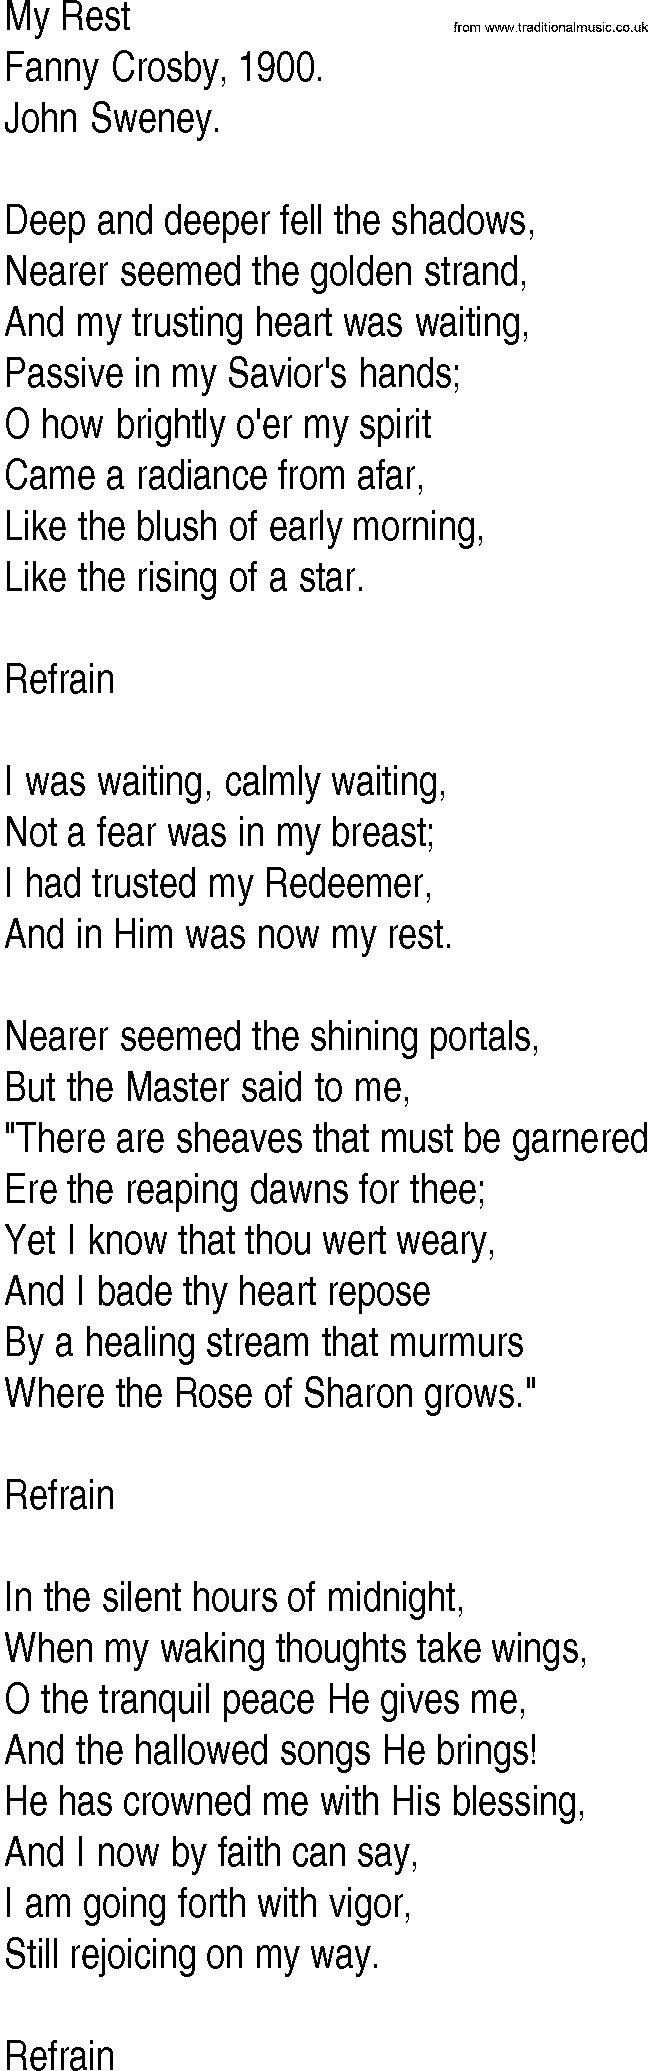 Hymn and Gospel Song: My Rest by Fanny Crosby lyrics